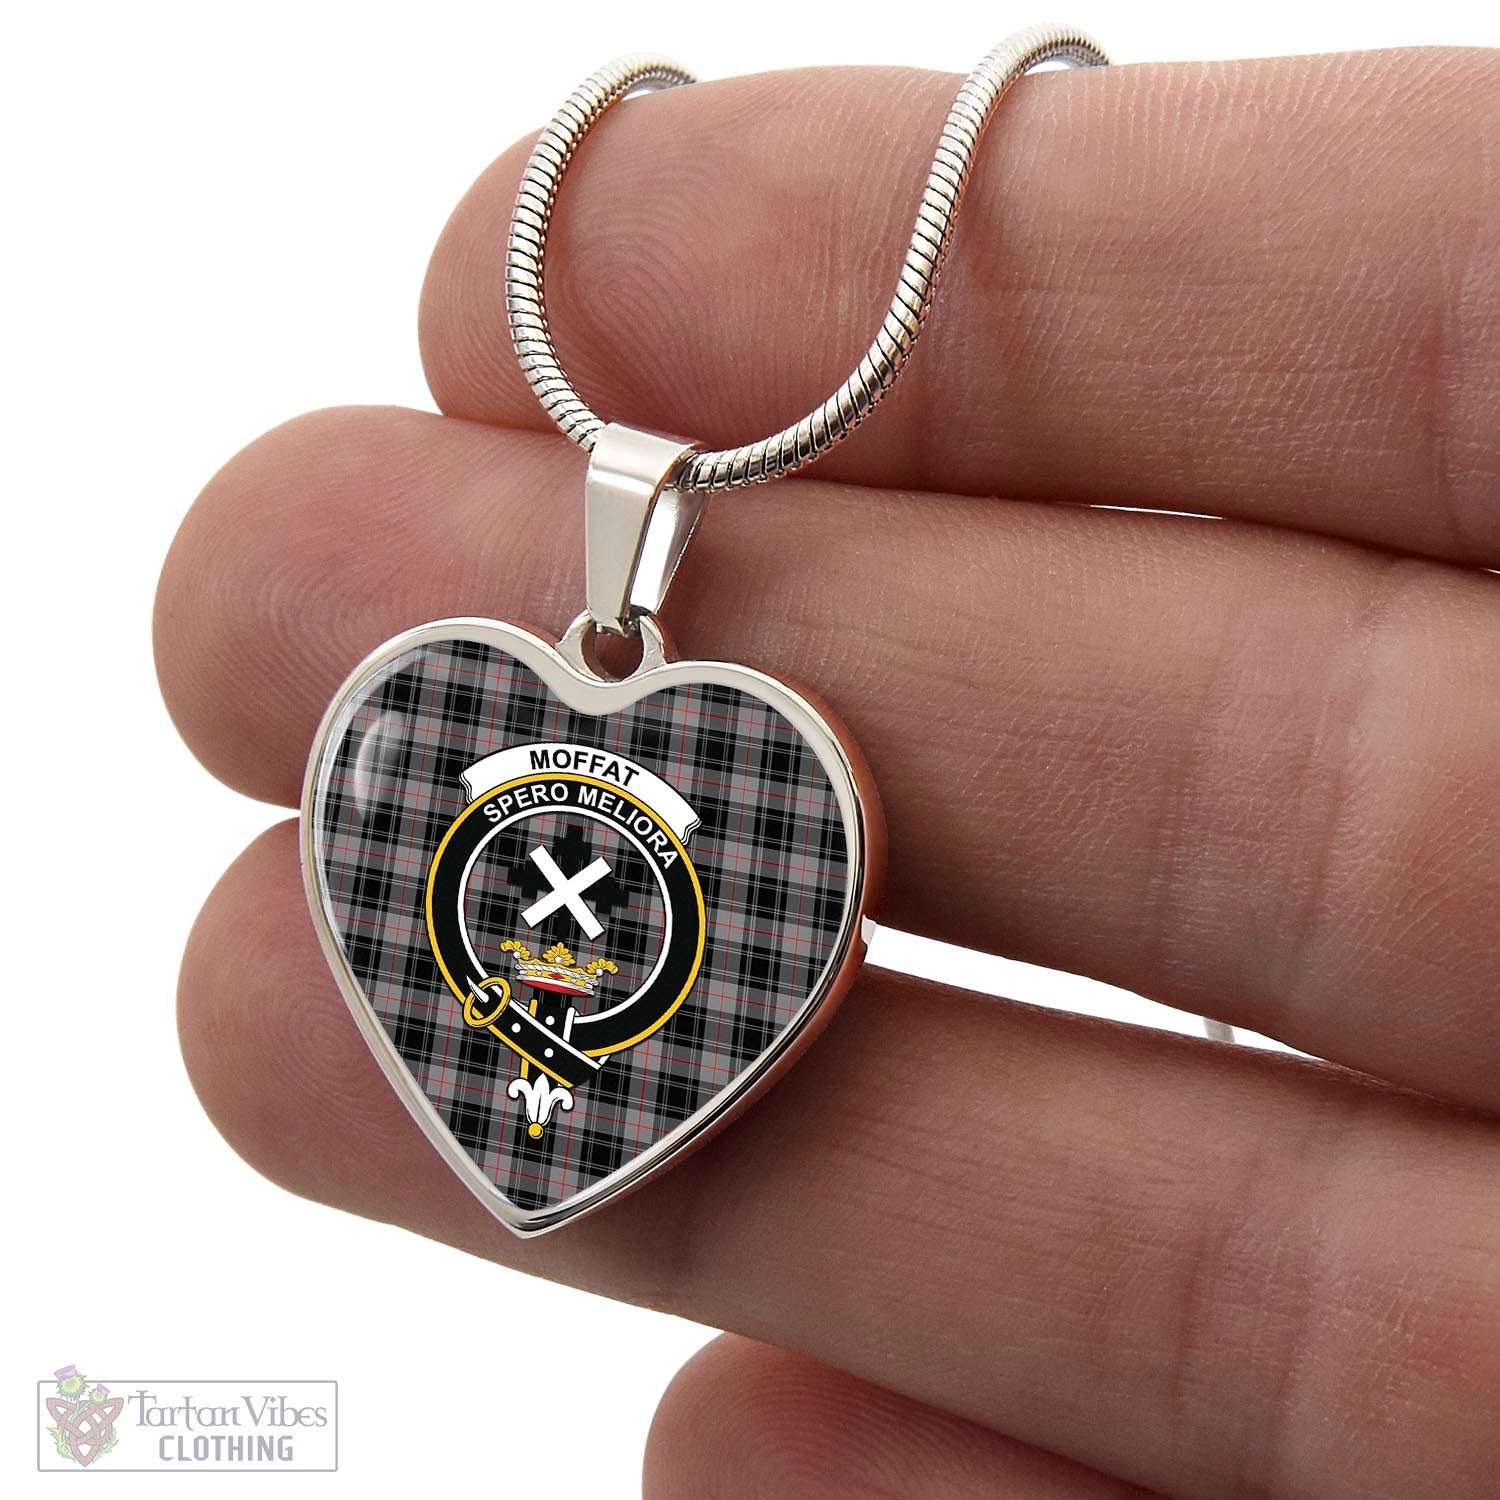 Tartan Vibes Clothing Moffat Modern Tartan Heart Necklace with Family Crest